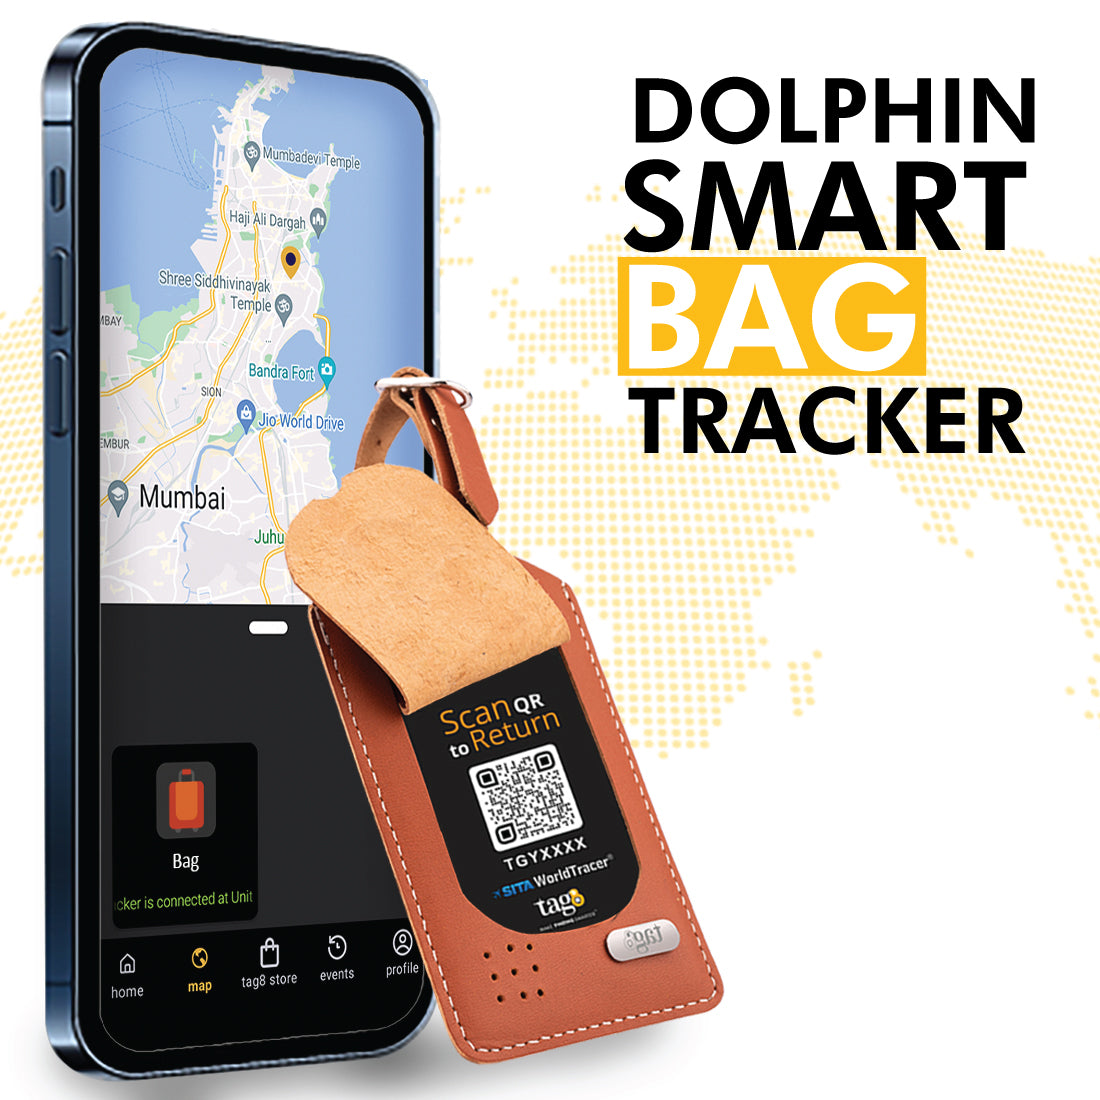 Dolphin Smart Bag Tracker - tag8